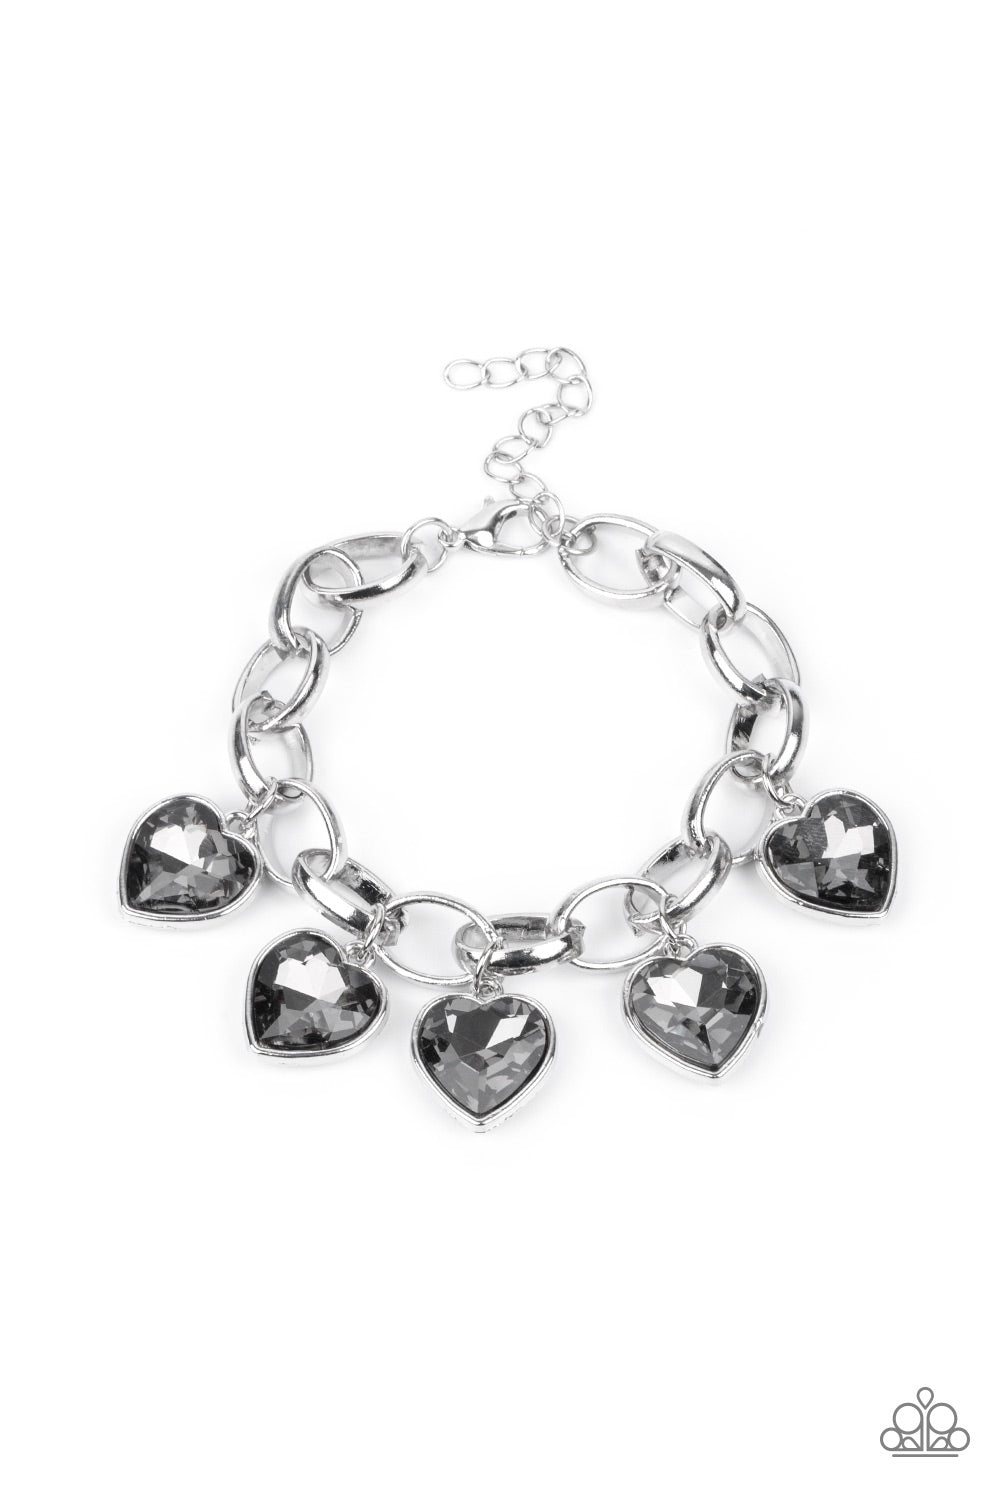 Paparazzi Candy Heart Charmer - Silver Charm Bracelet Paparazzi jewelry images